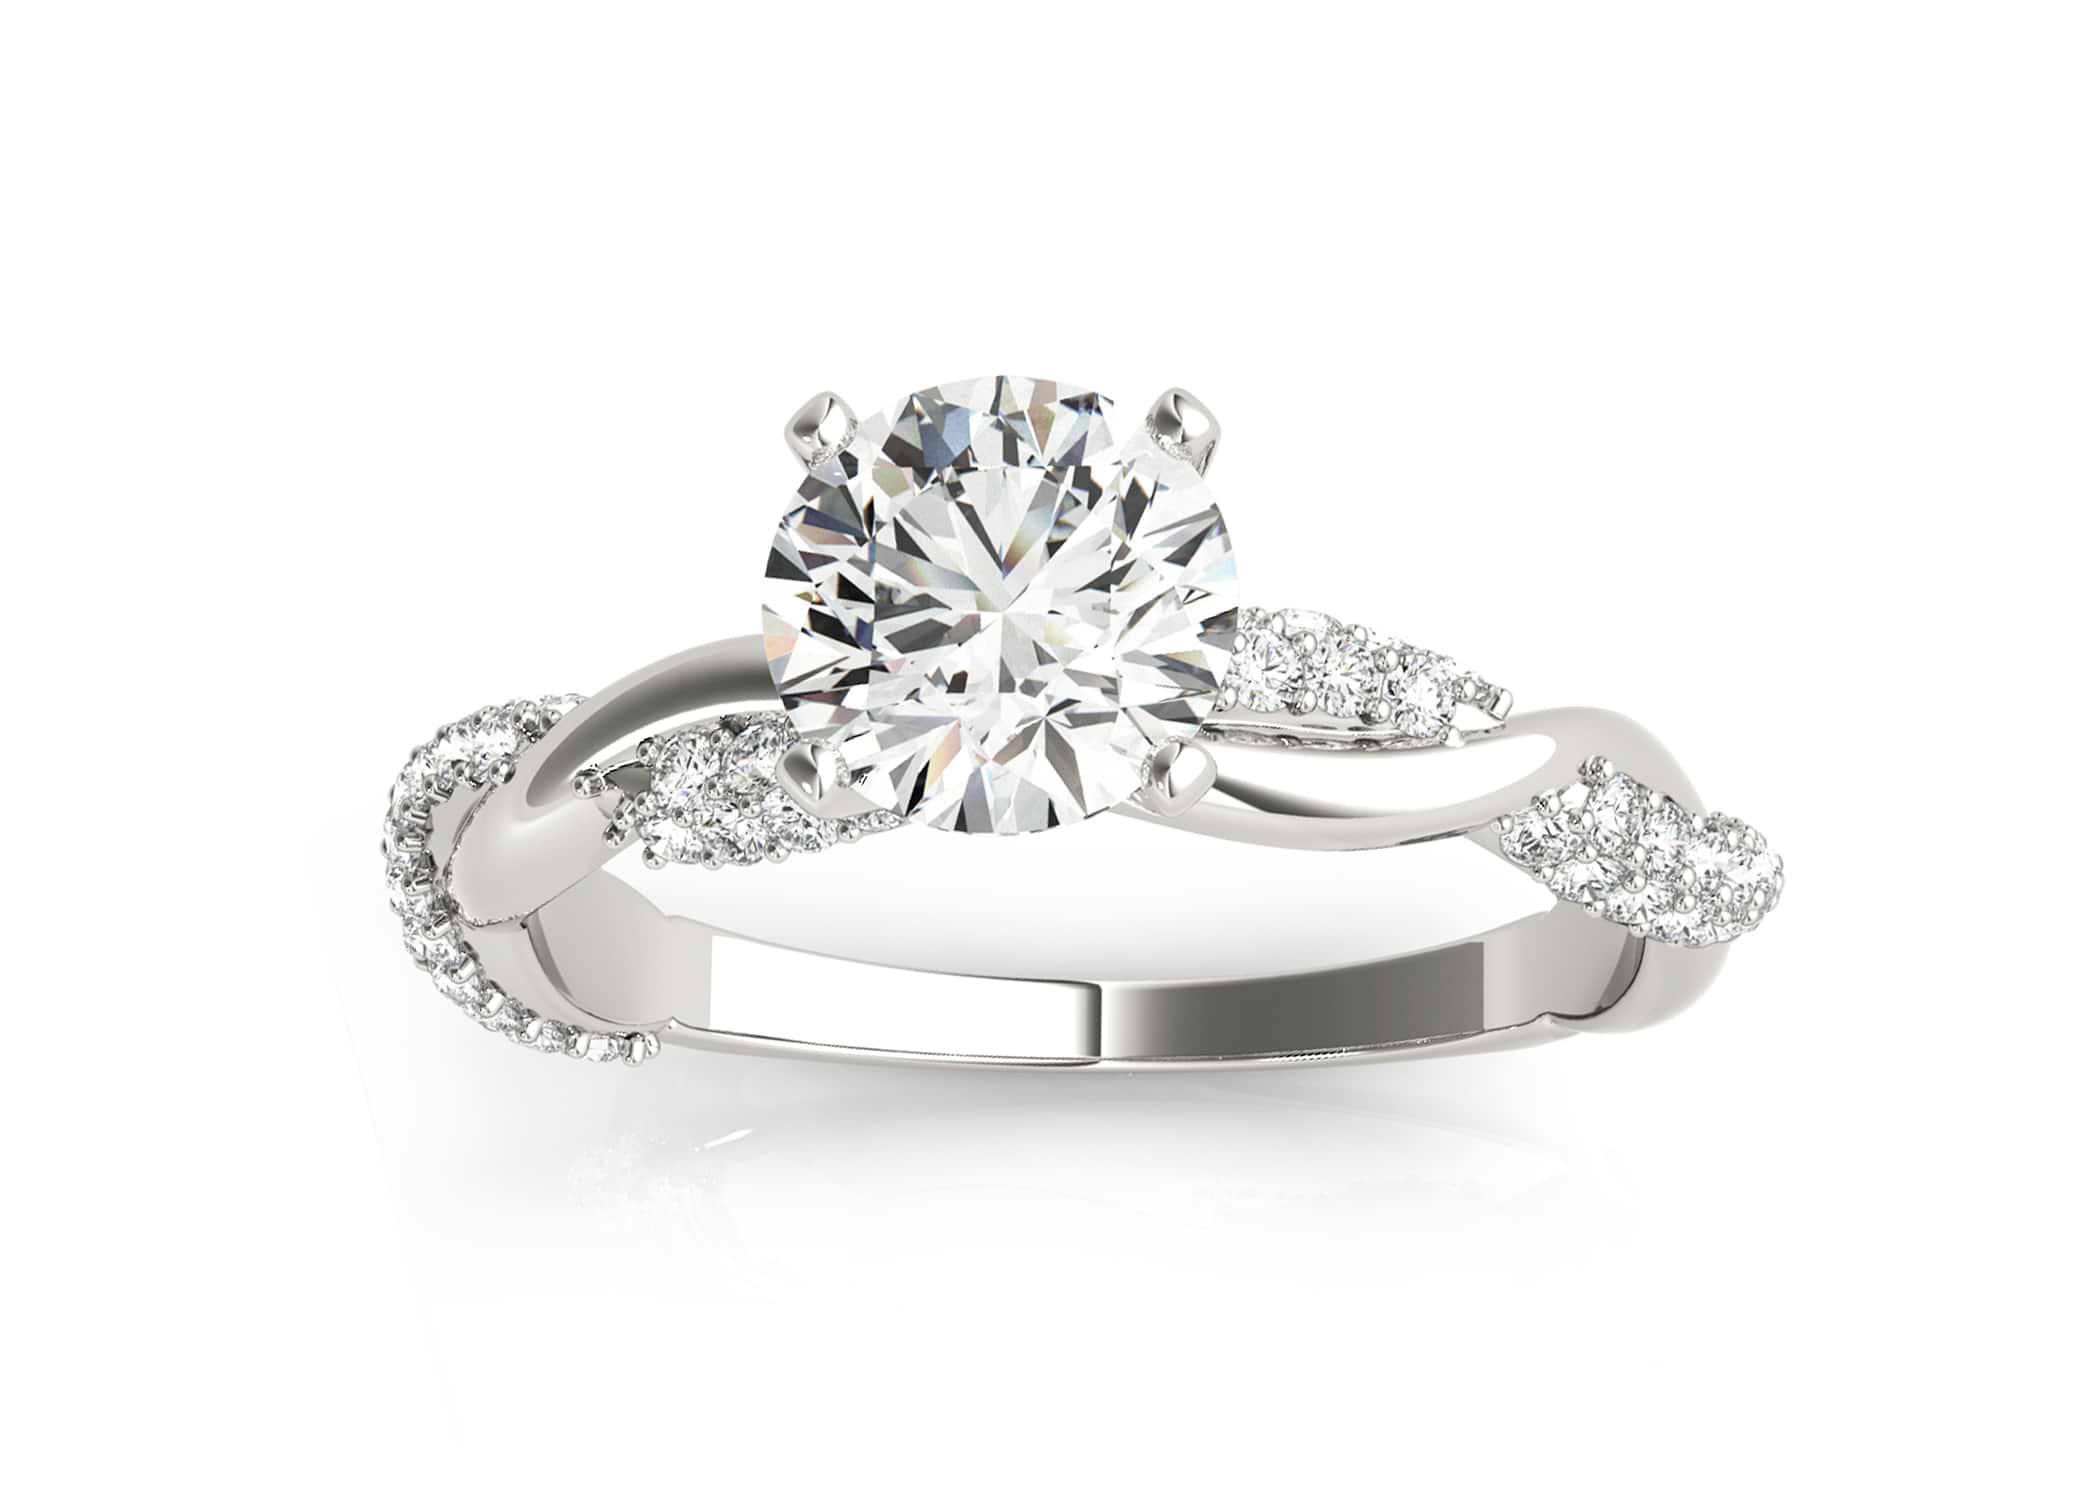 Infinity Twist Diamond Engagement Ring Setting Palladium (0.40ct)